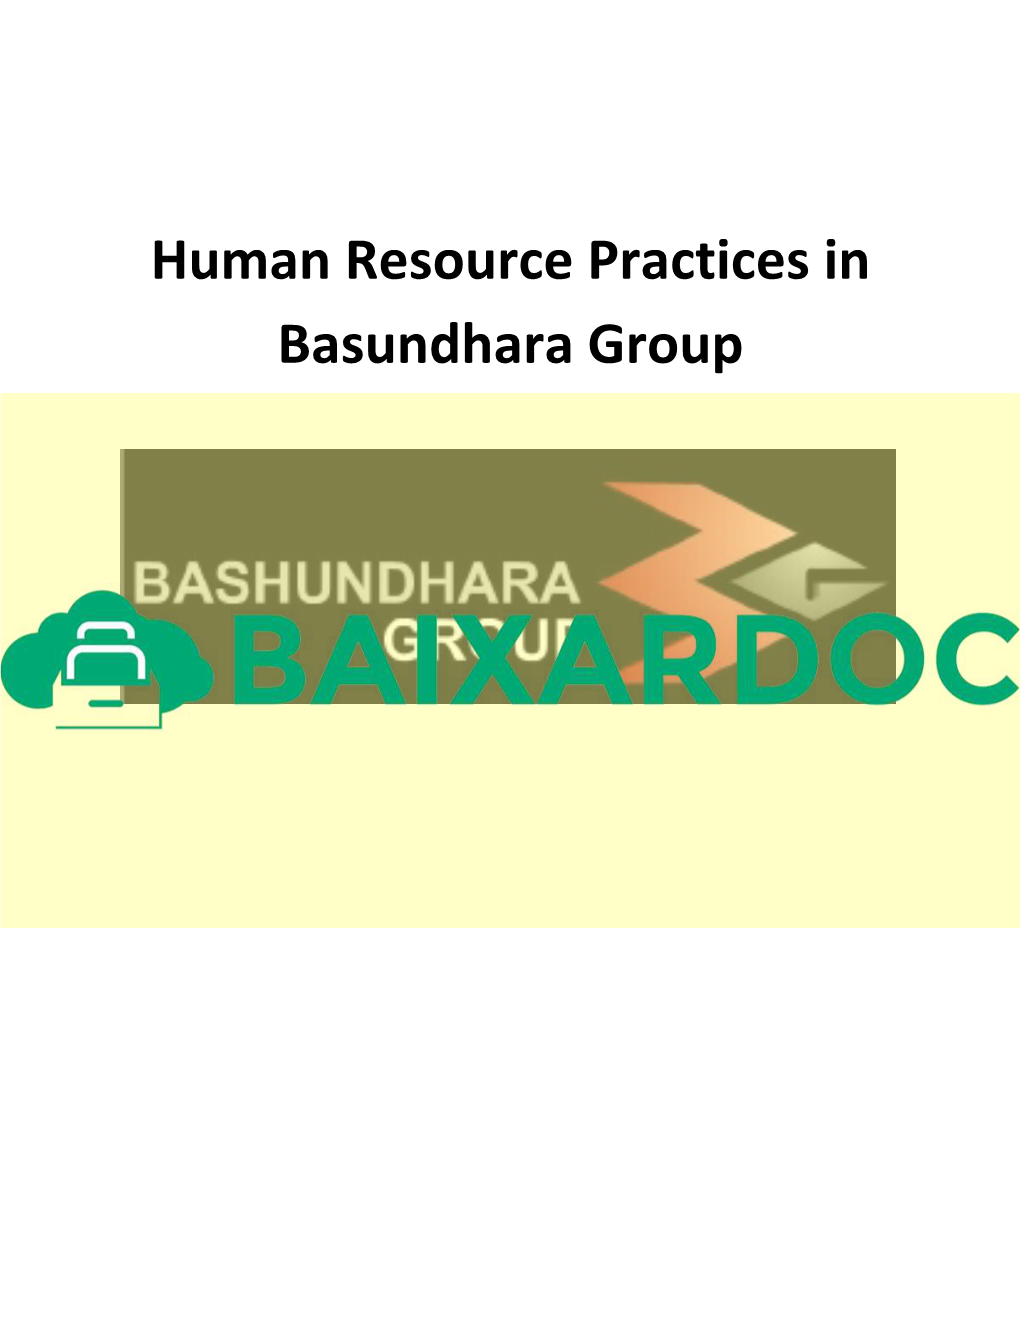 HRM Practice in Bashundhara Group